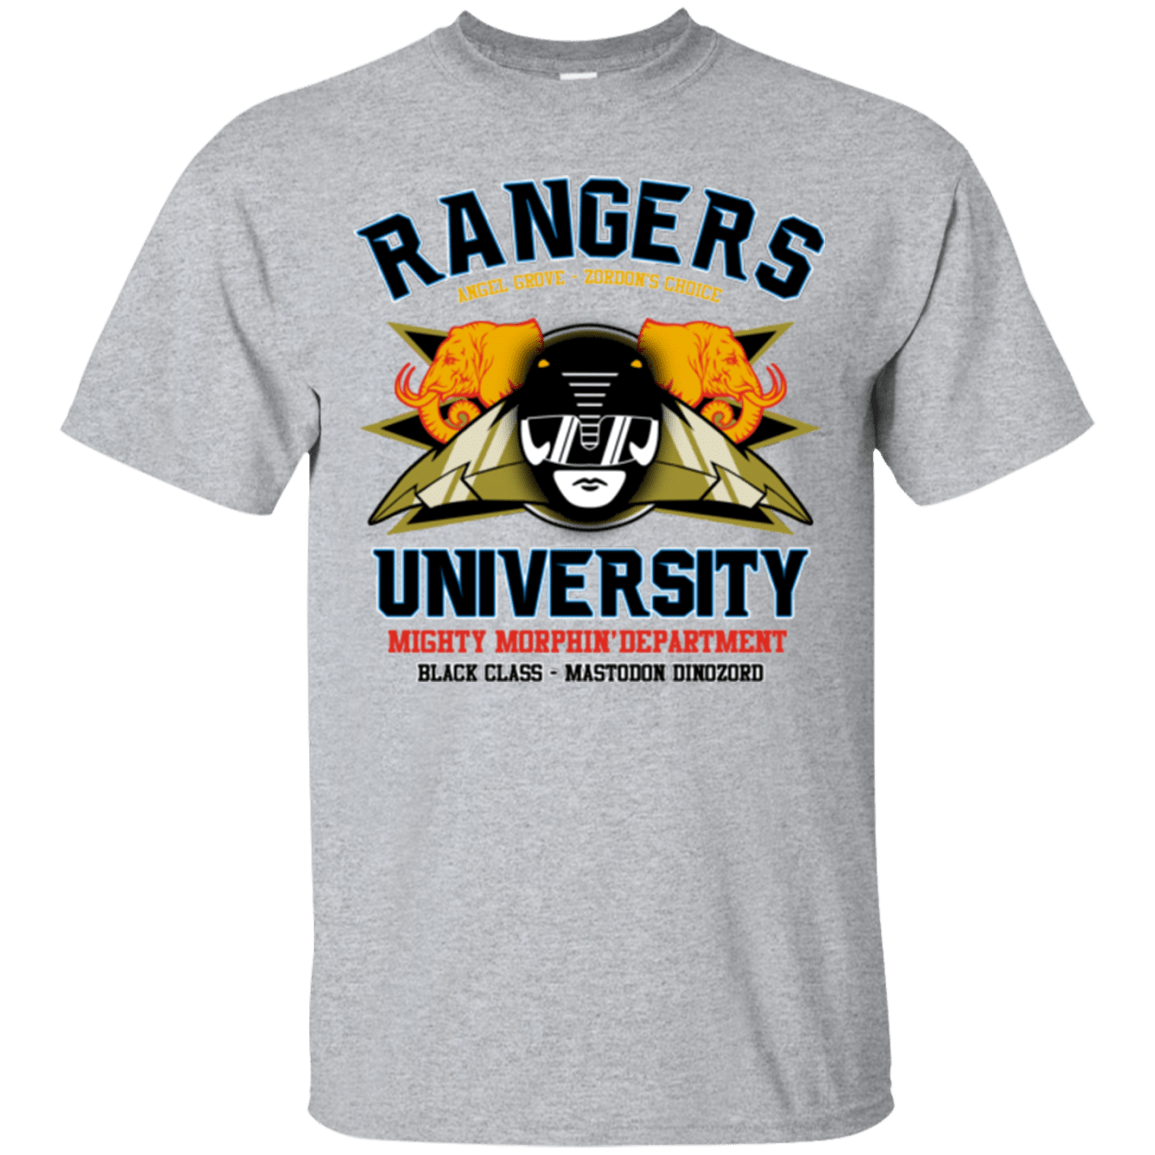 T-Shirts Sport Grey / Small Rangers U Black Ranger T-Shirt